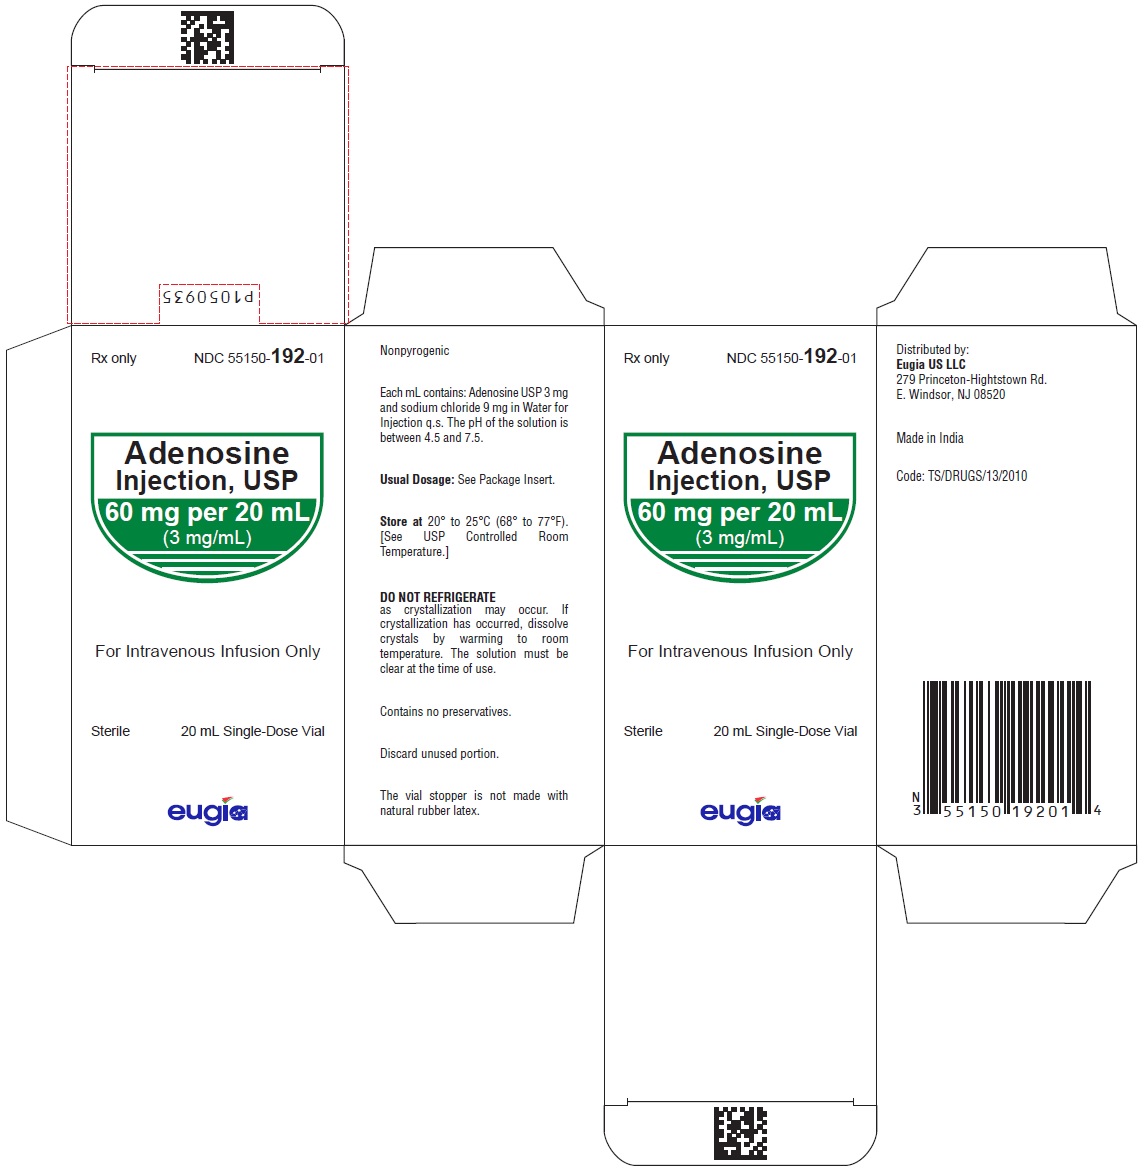 PACKAGE LABEL-PRINCIPAL DISPLAY PANEL - 60 mg per 20 mL (3 mg / mL) - Container-Carton (1 Vial)